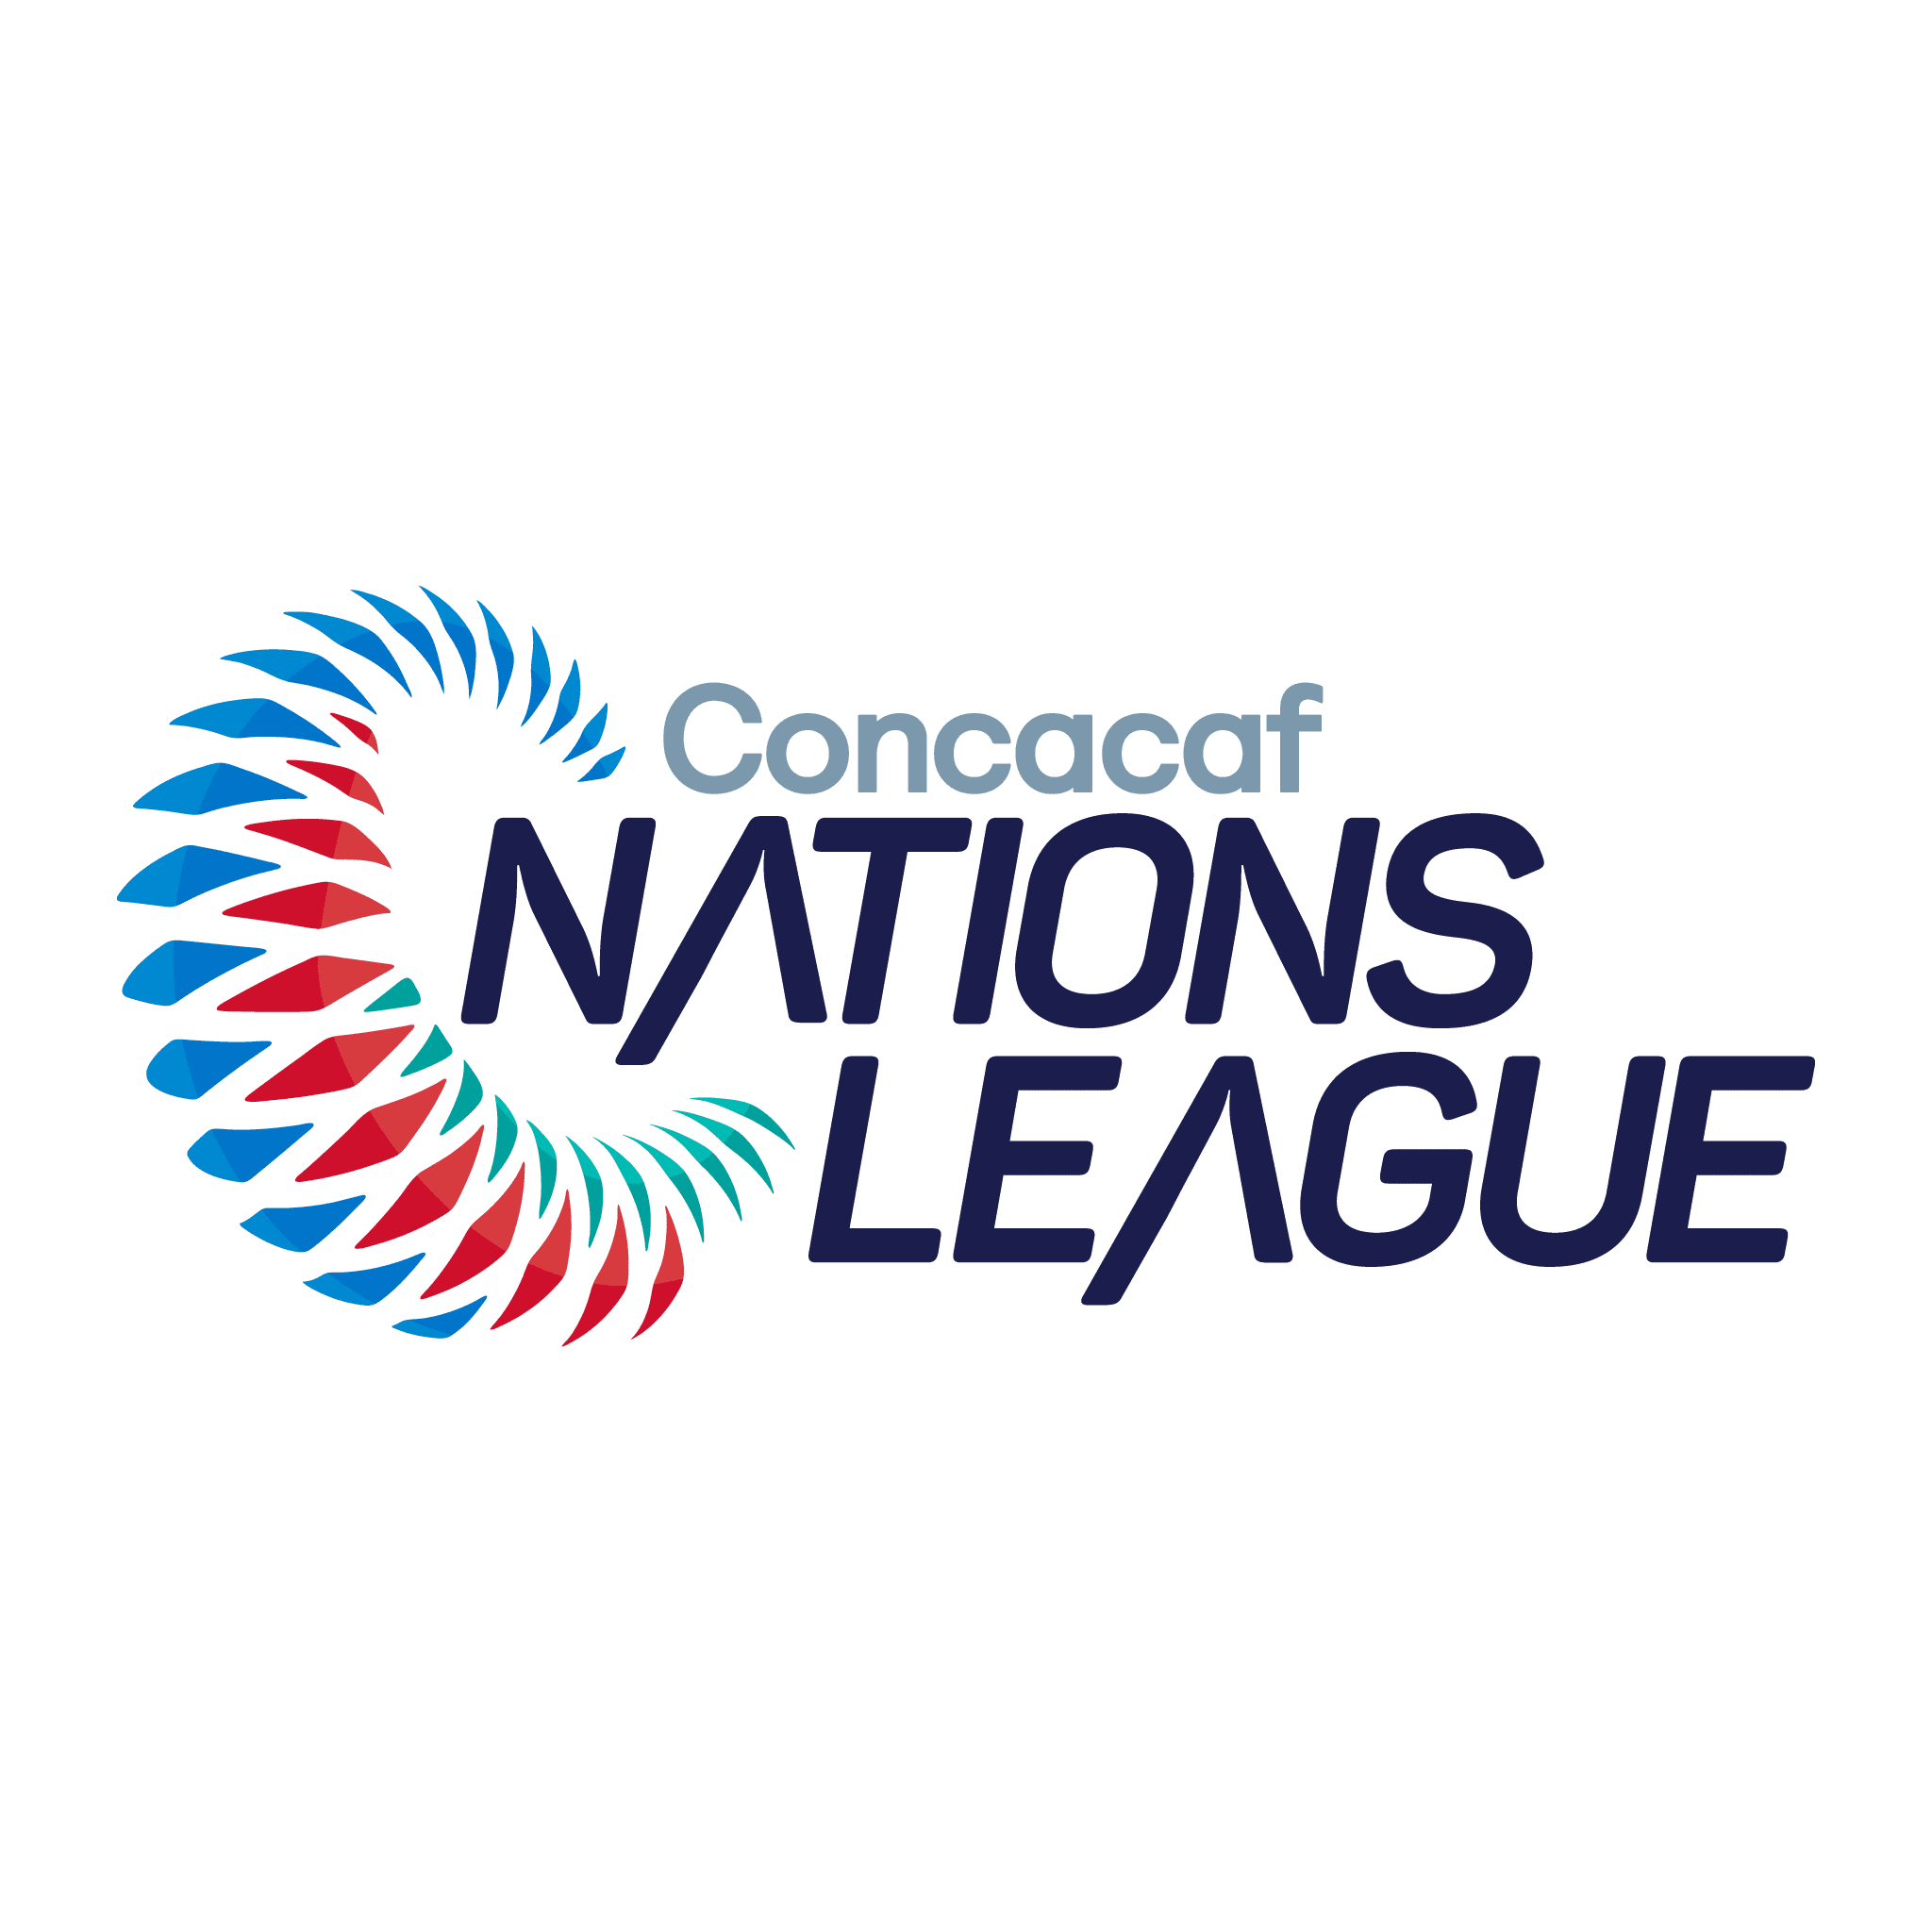 marca concacaf national league